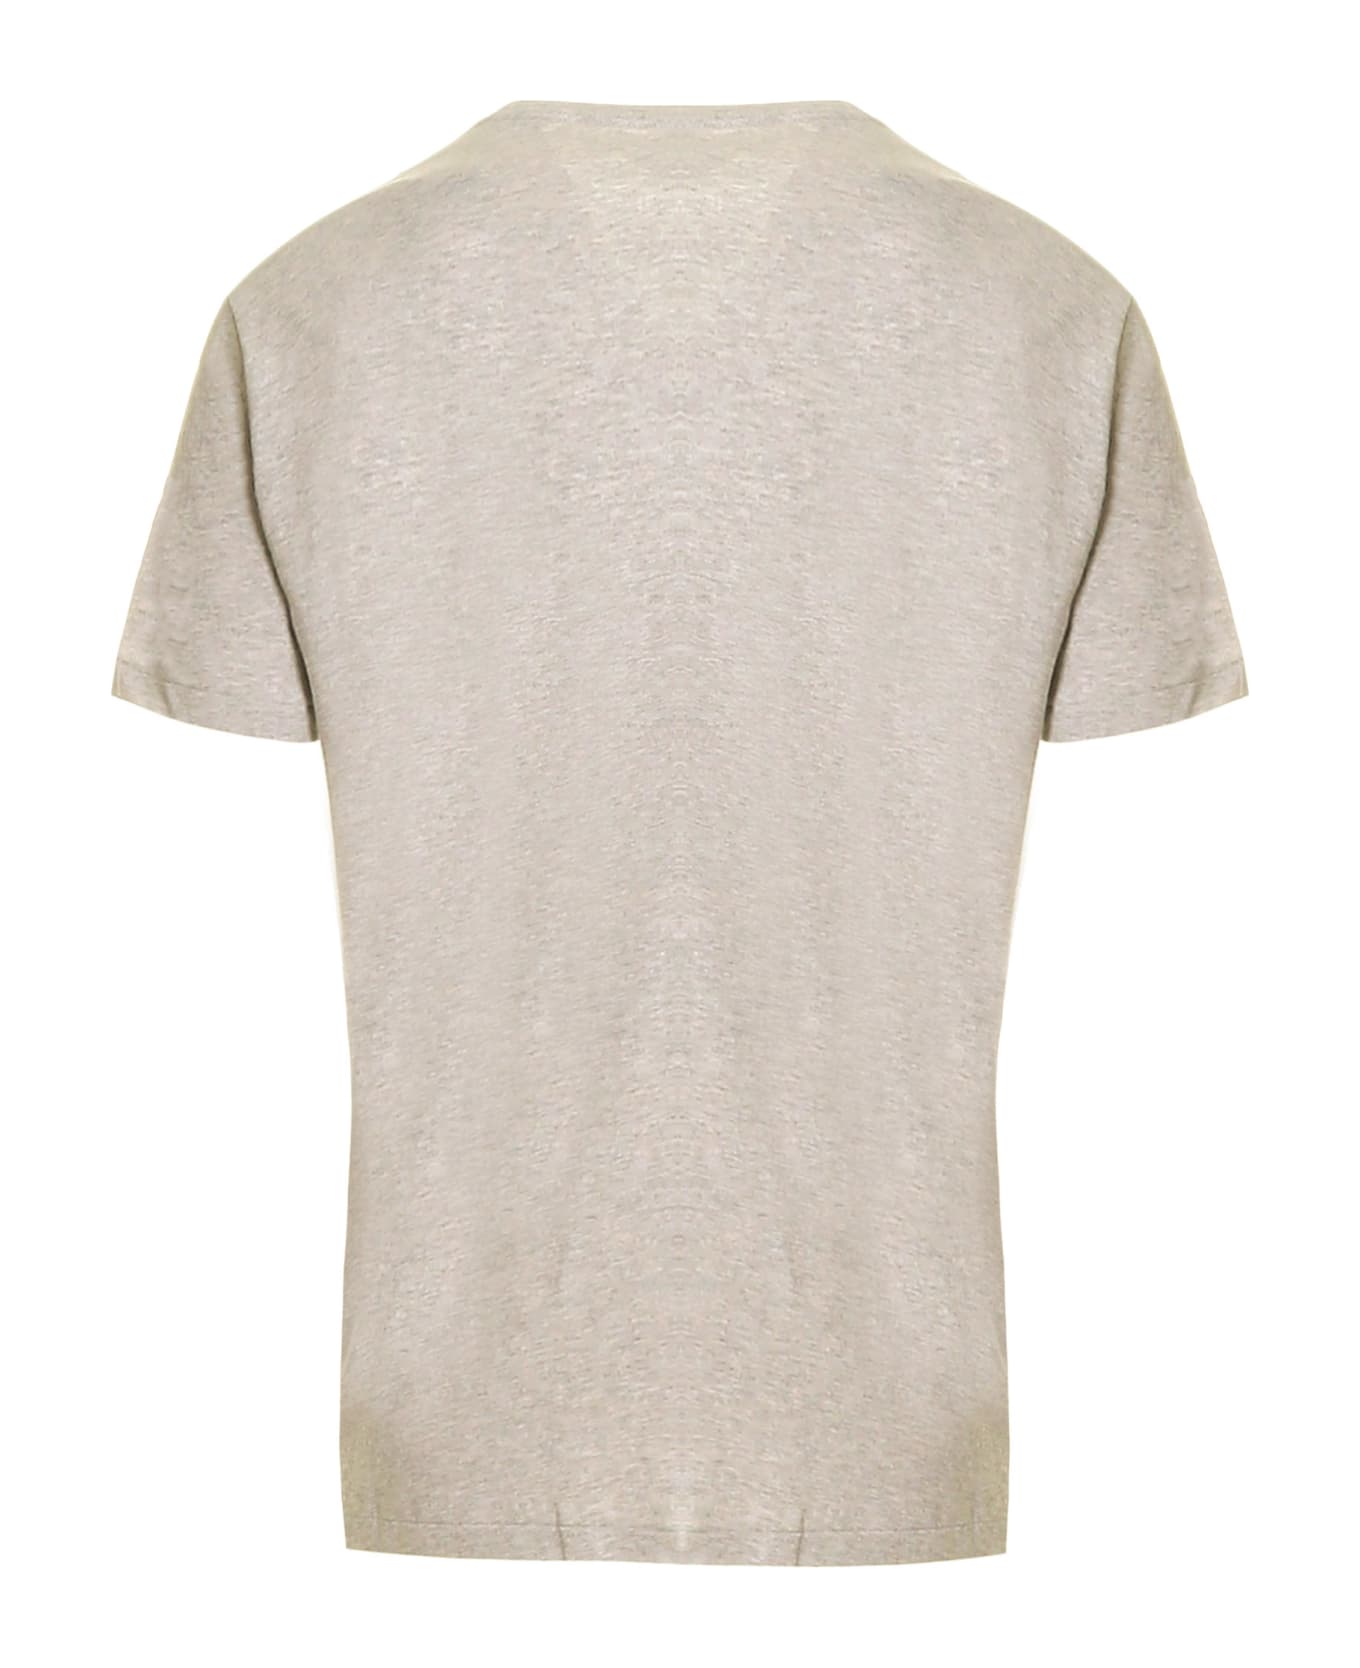 Ralph Lauren Grey Cotton T-shirt - New Grey Heather